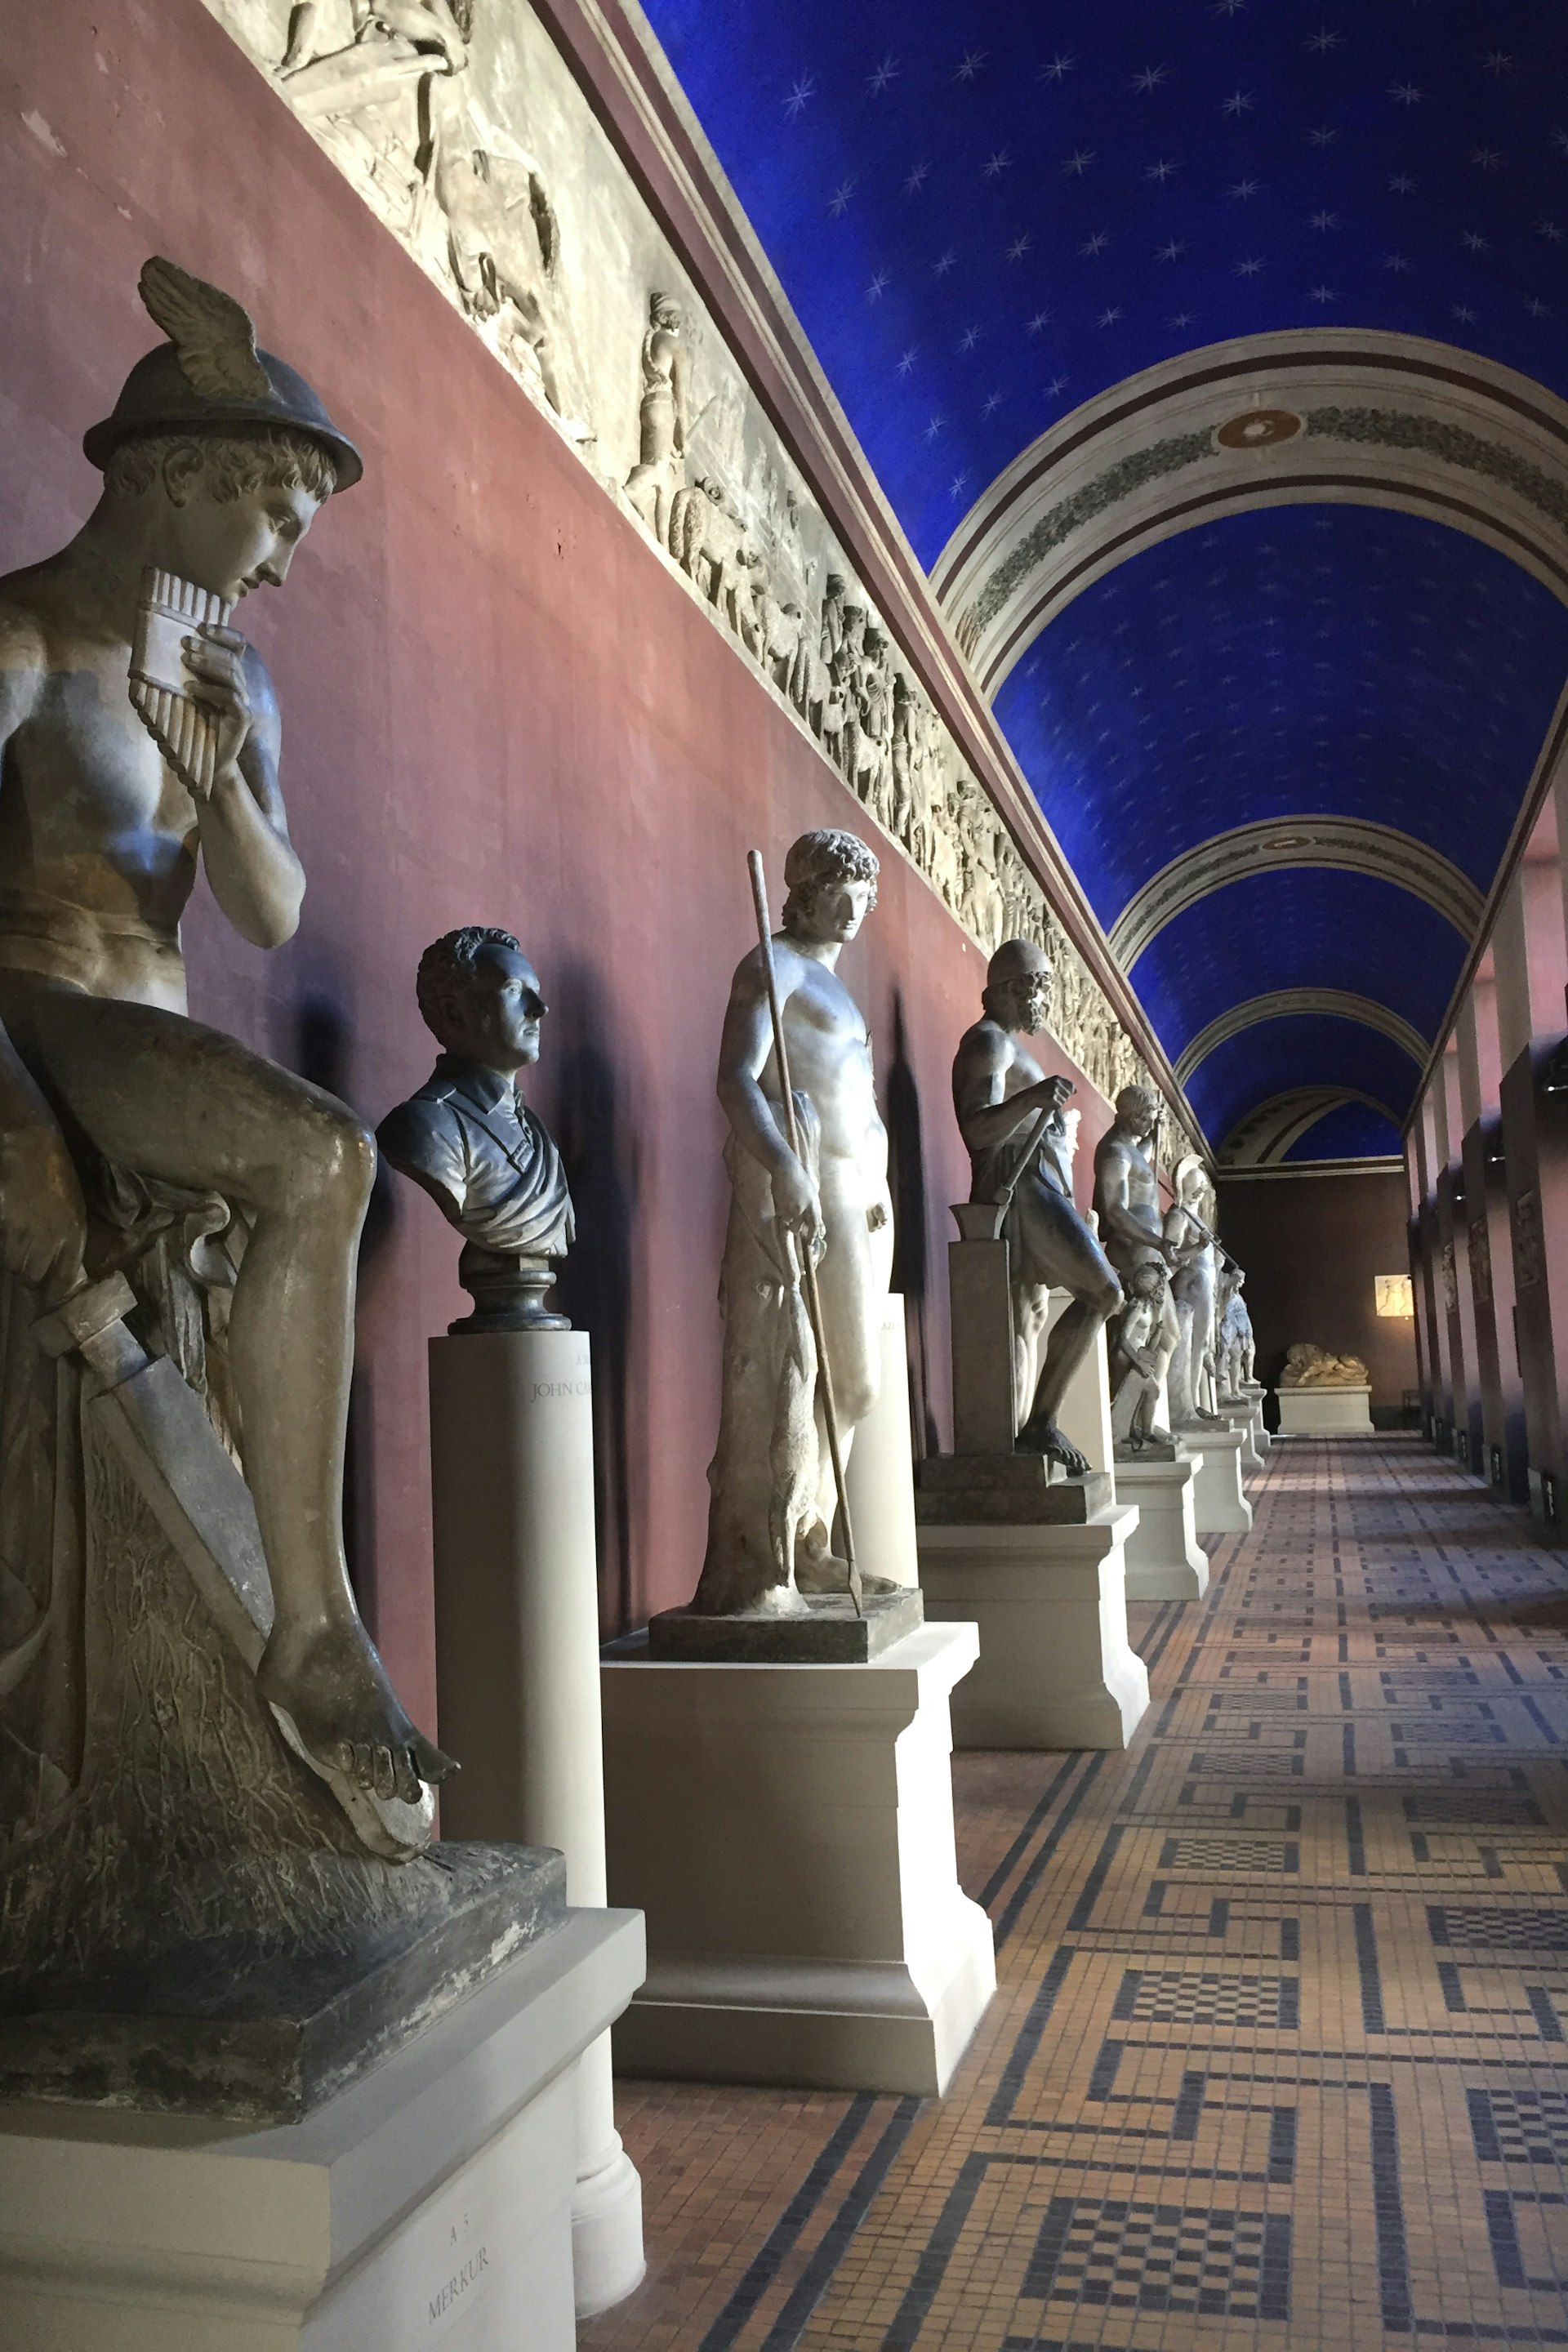 Sculptures lining the corridors of Thorvaldsens Museum